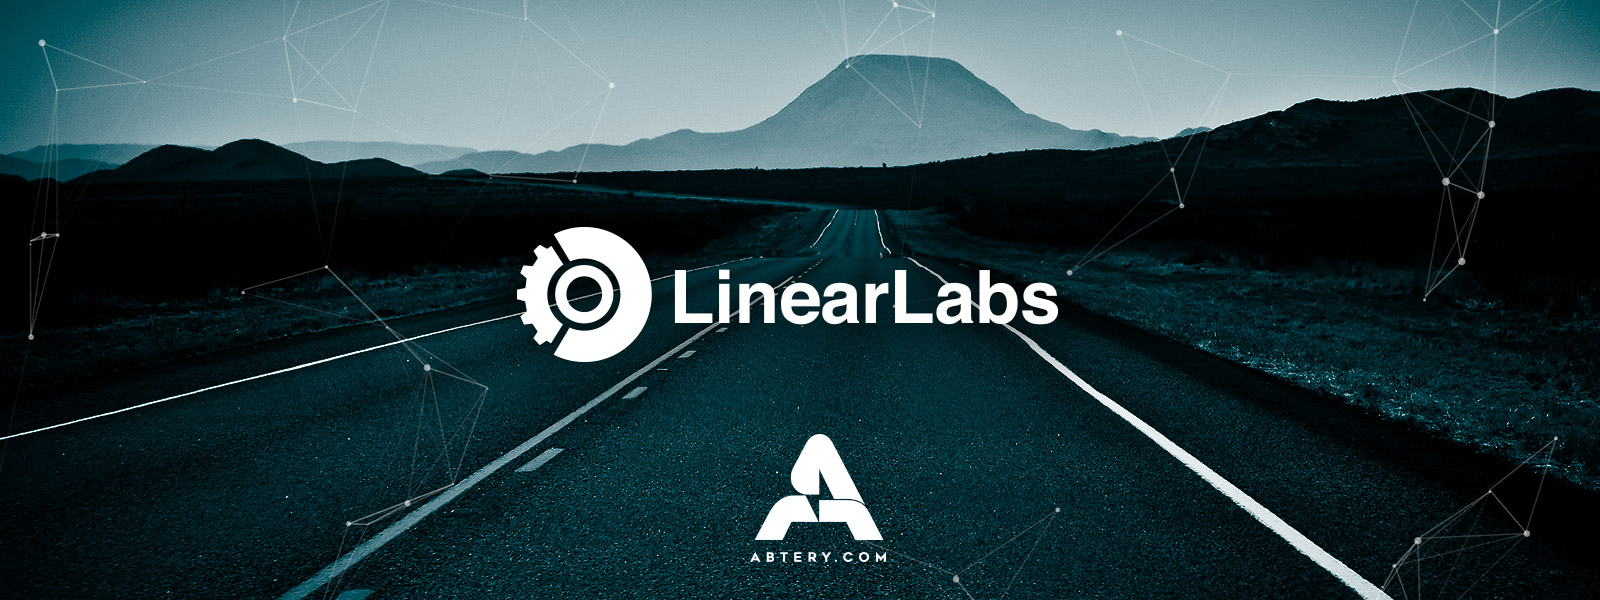 Linear Labs partnership